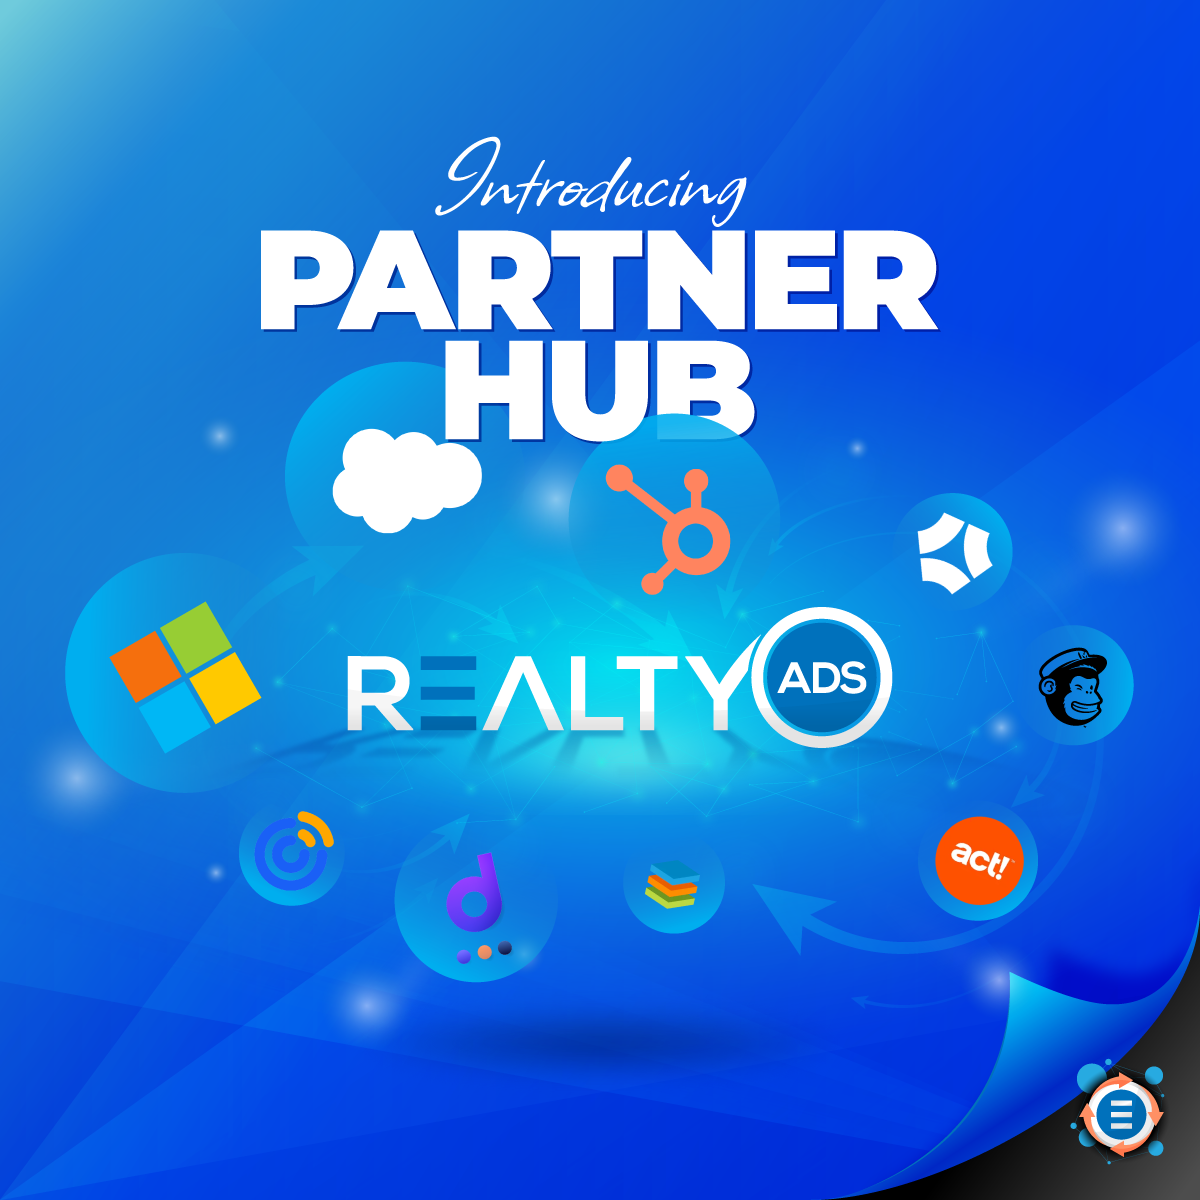 Introducing The RealtyAds Partner Hub